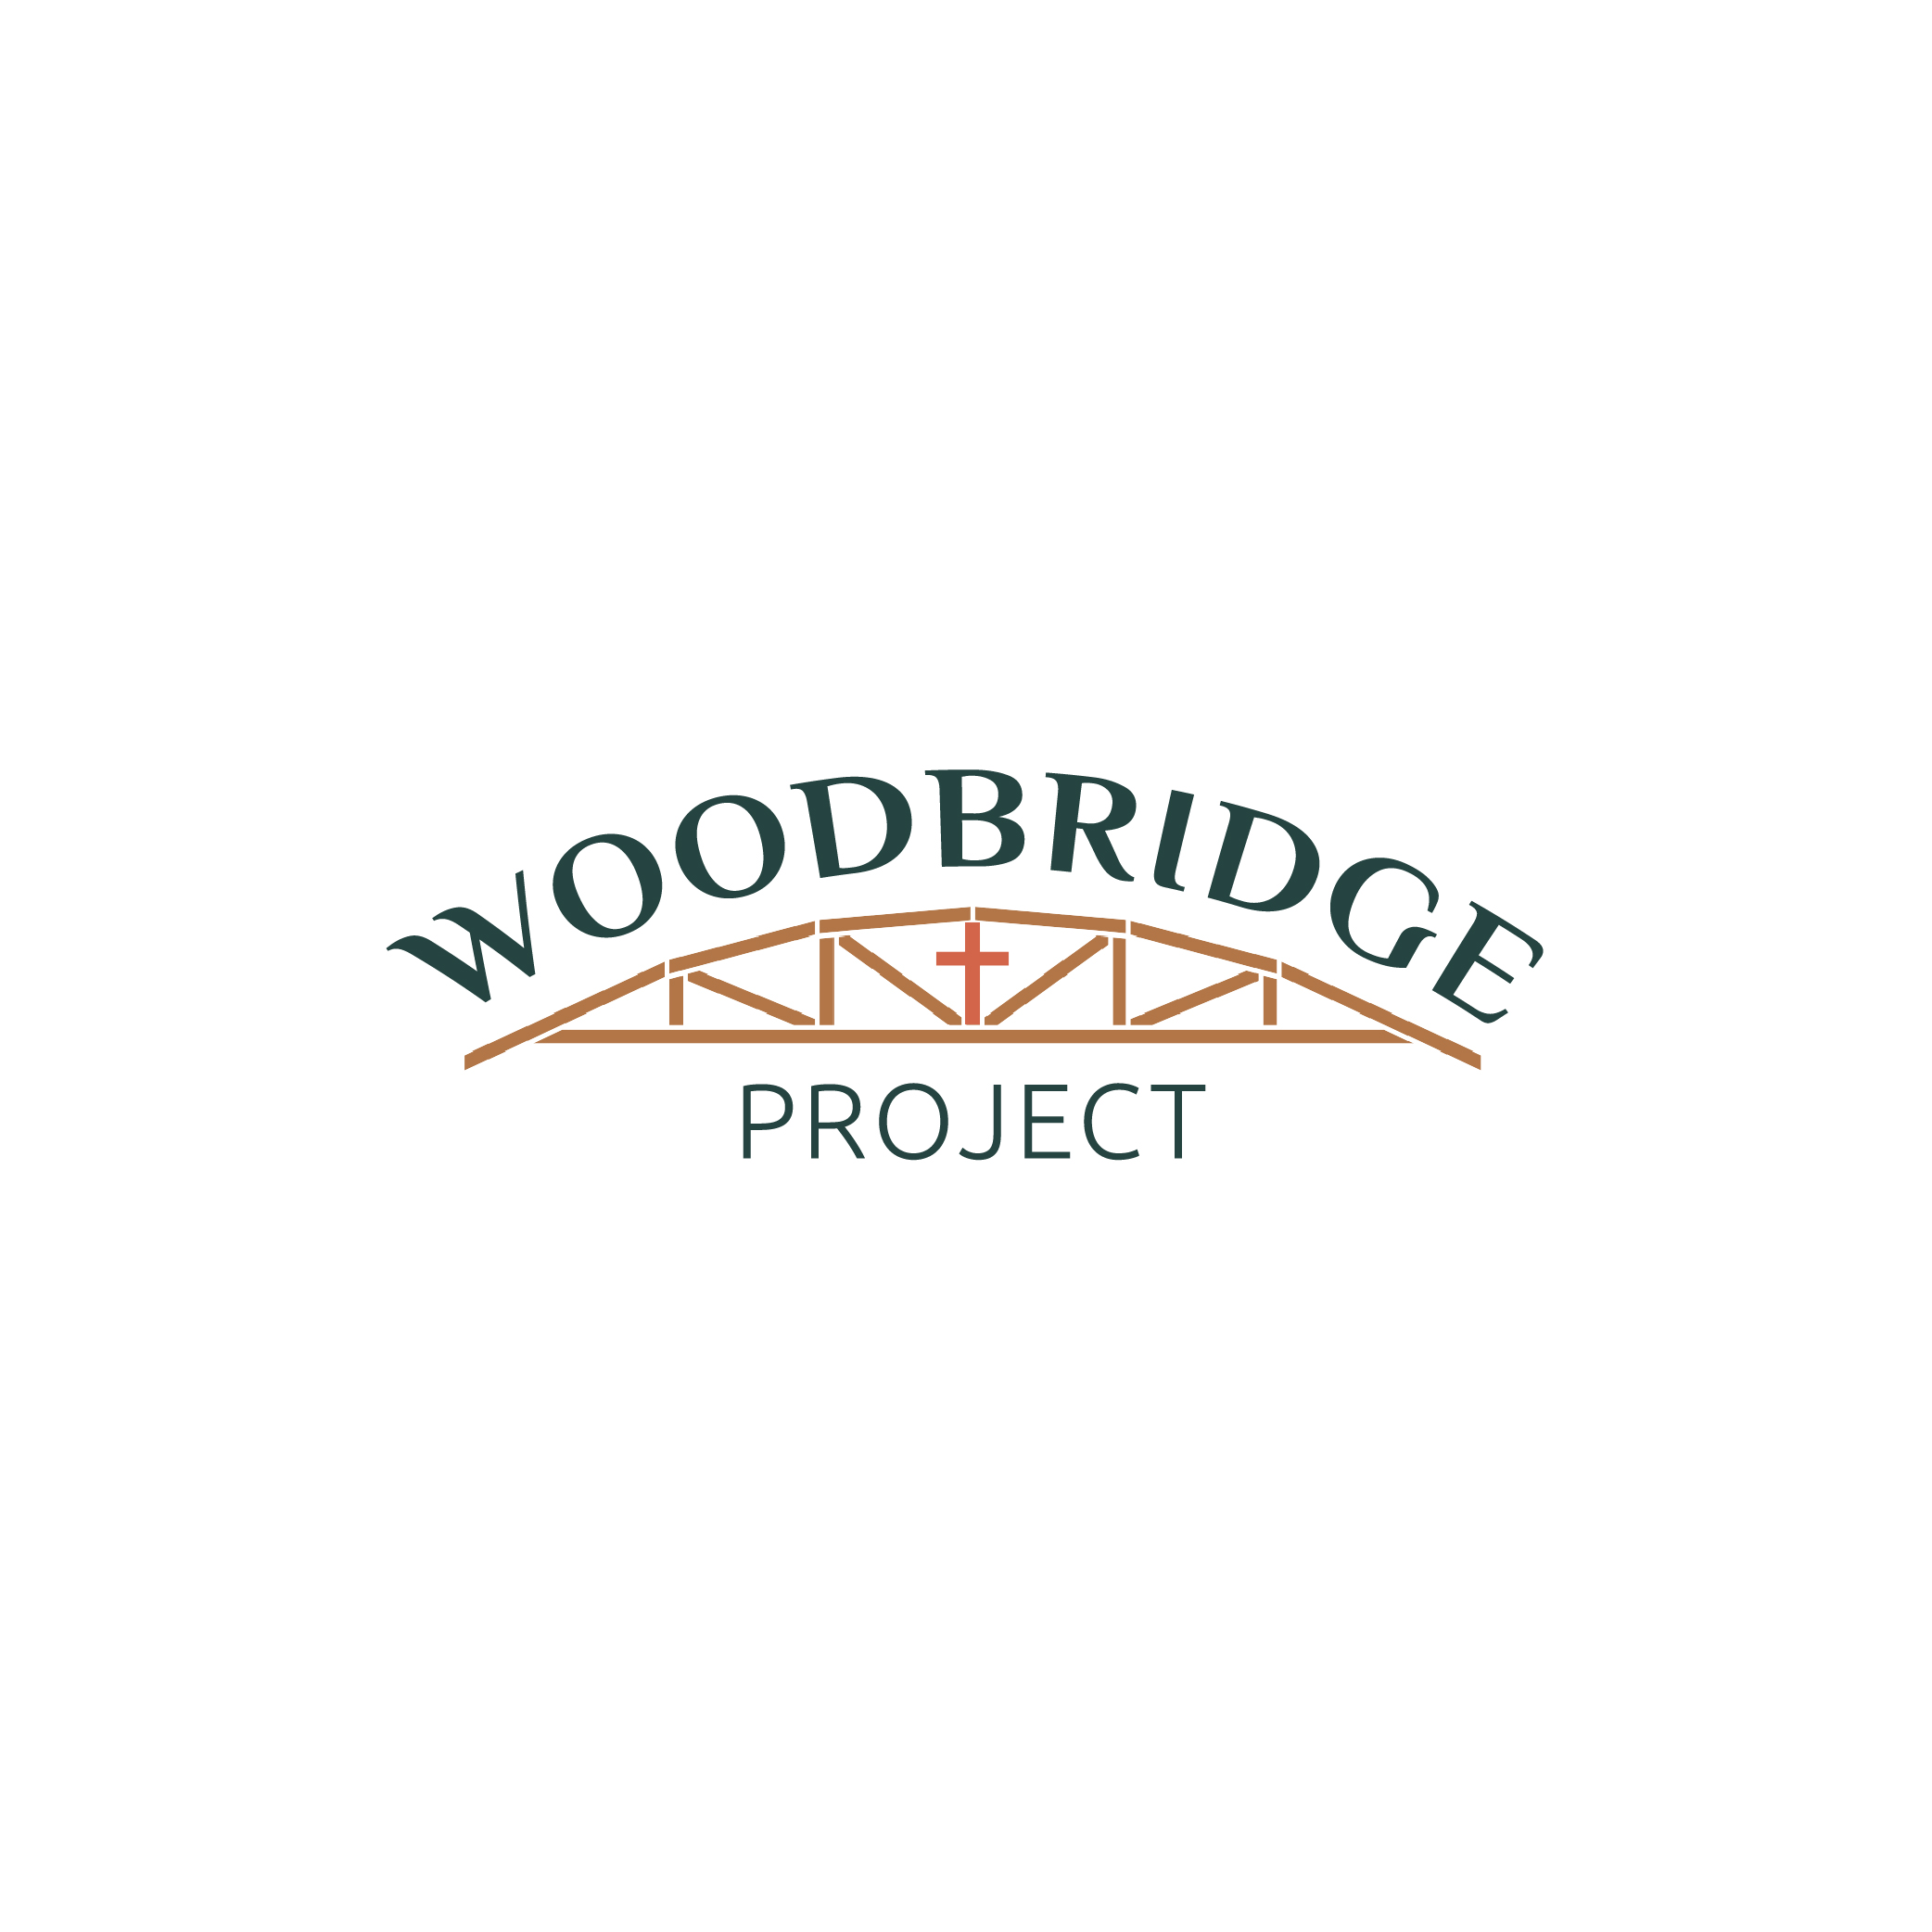 Woodbridge Box.jpg